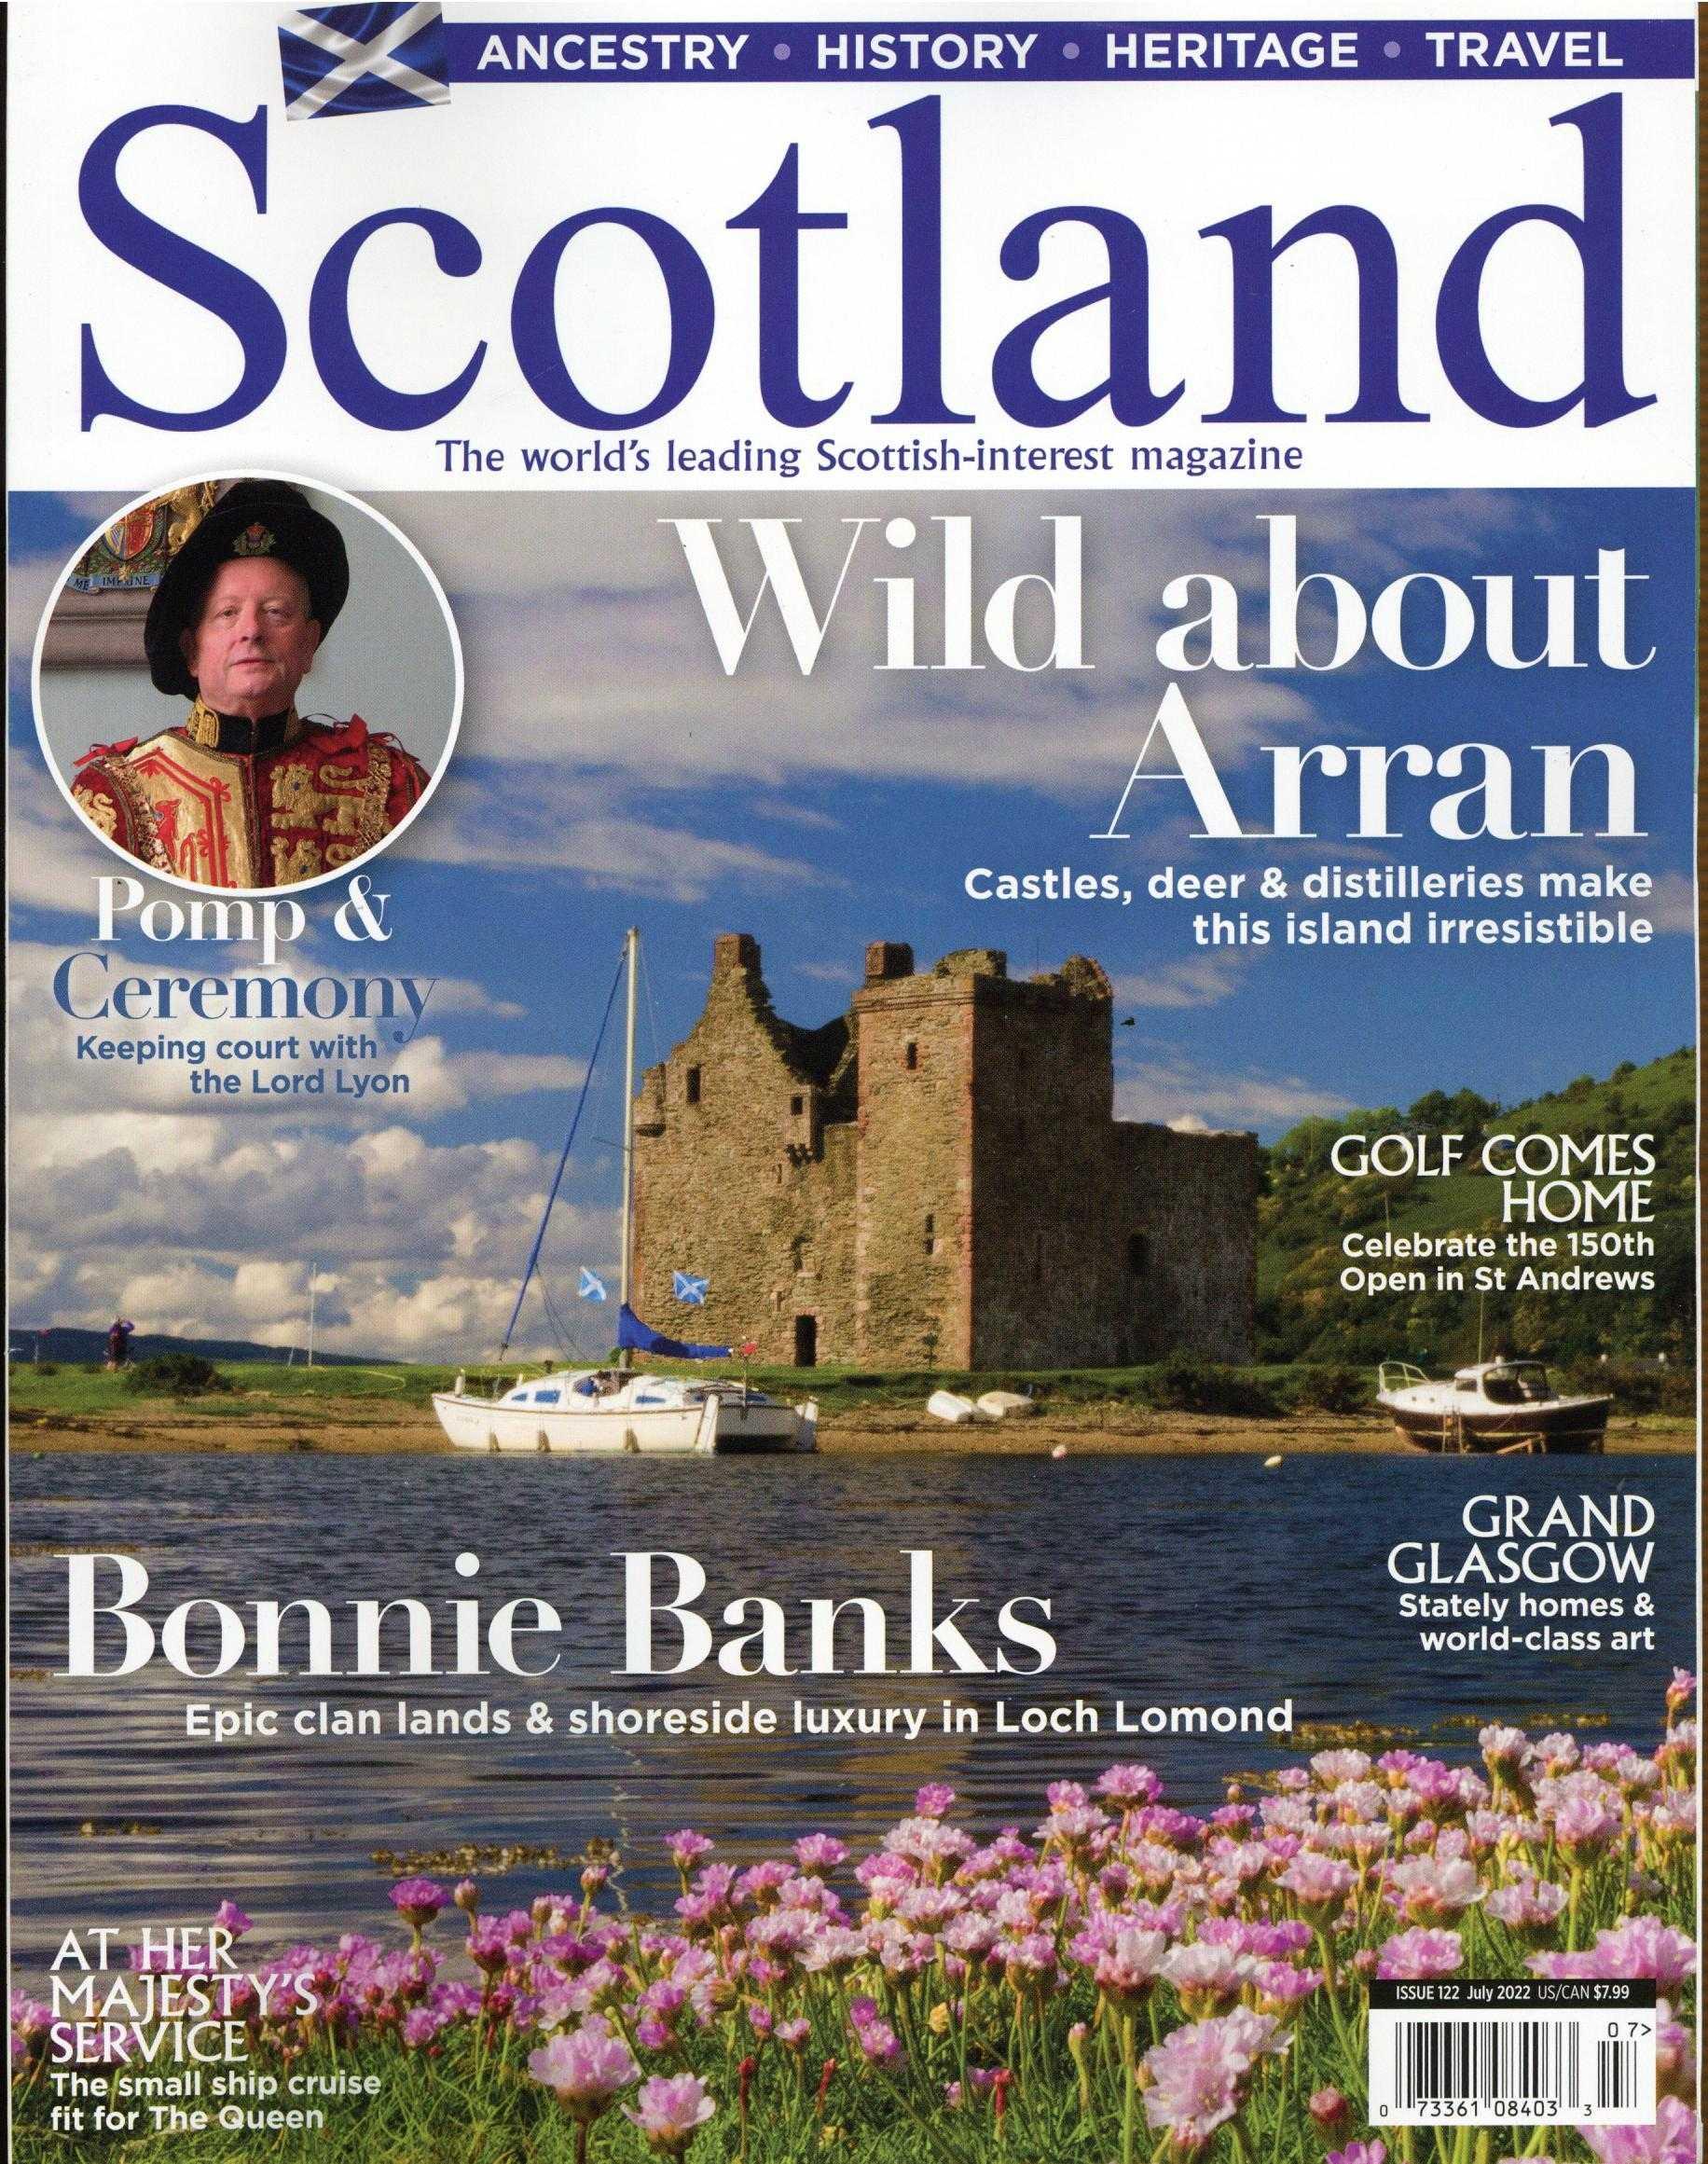 Scotland Magazine